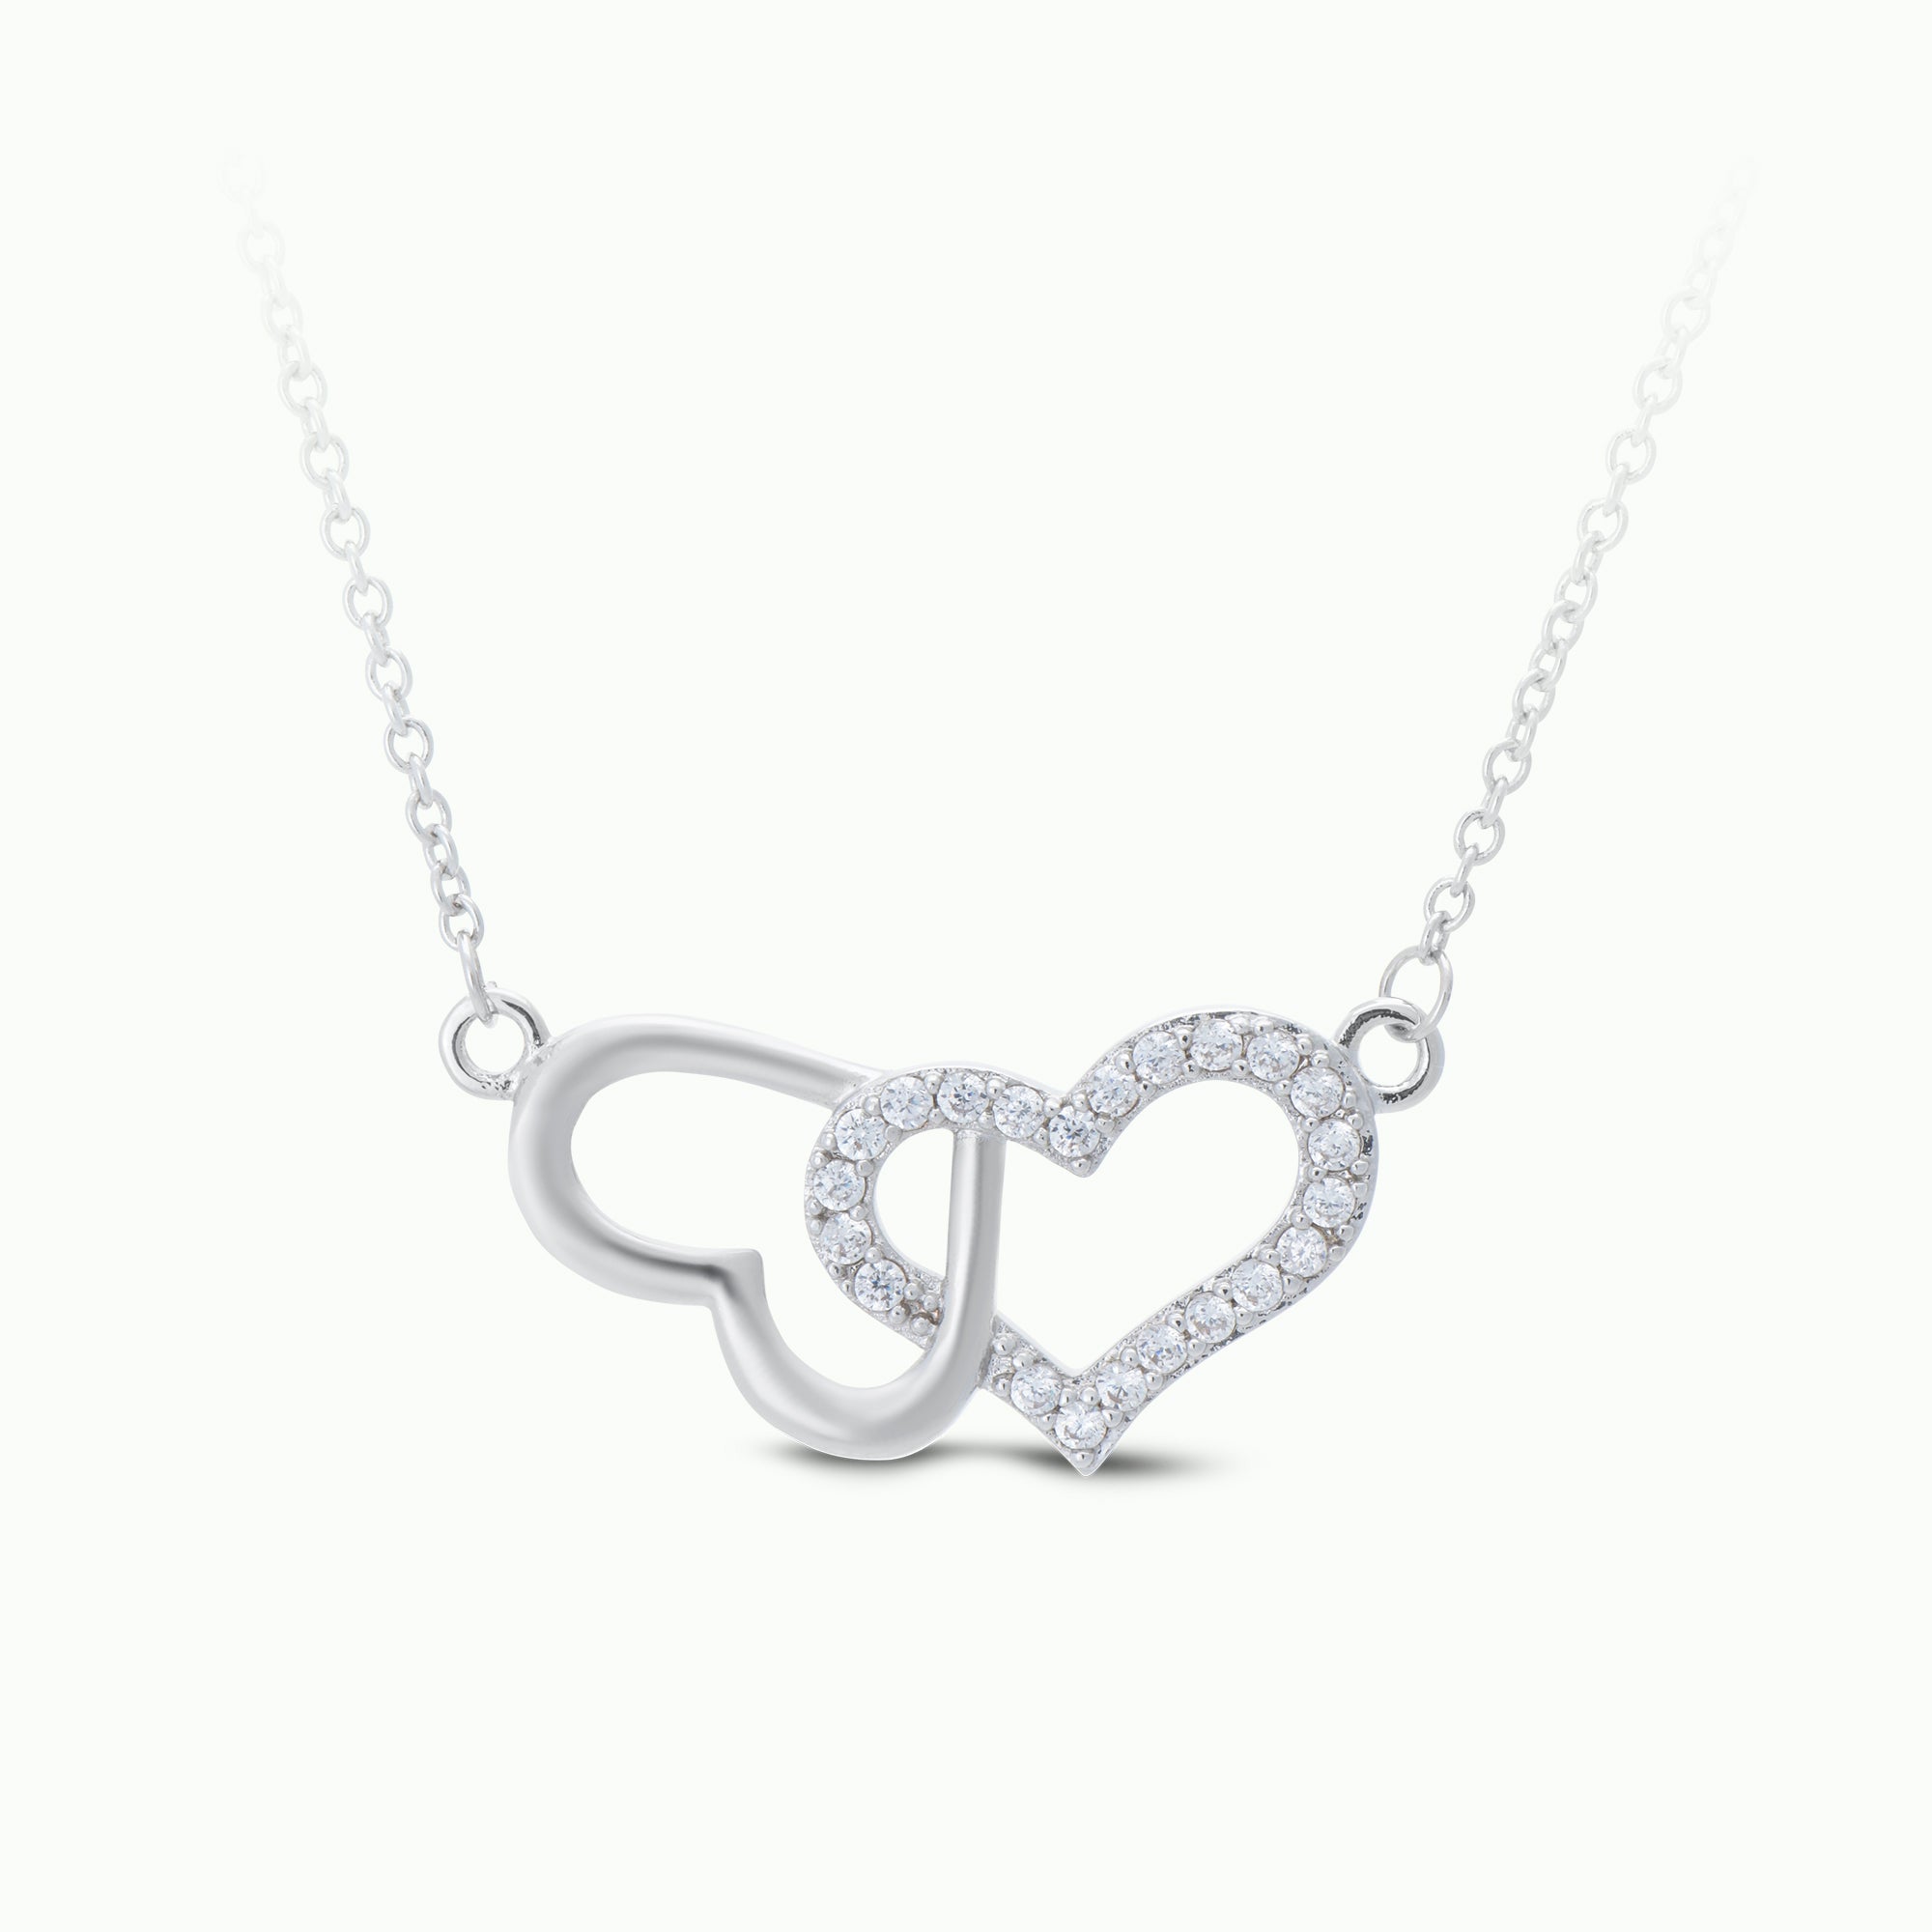 silver double heart clip art